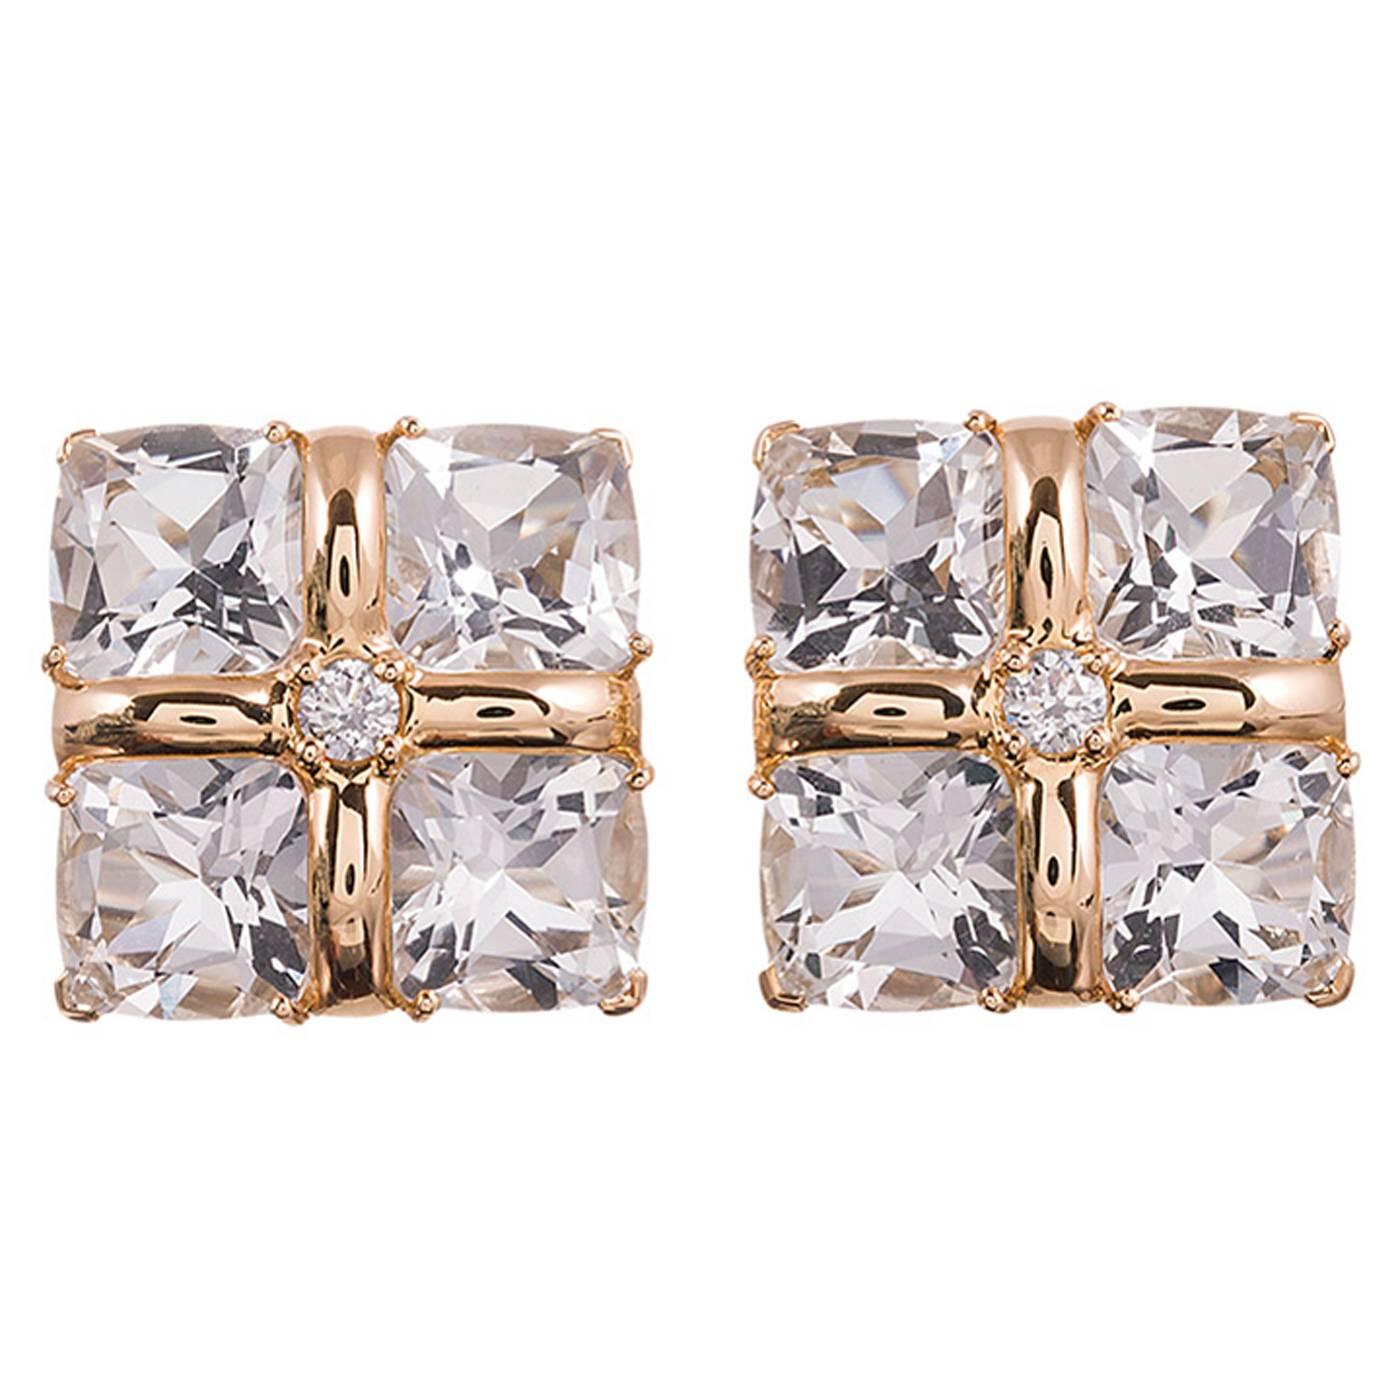 Seaman Schepps Crystal Diamond Gold “Four Square" Earrings